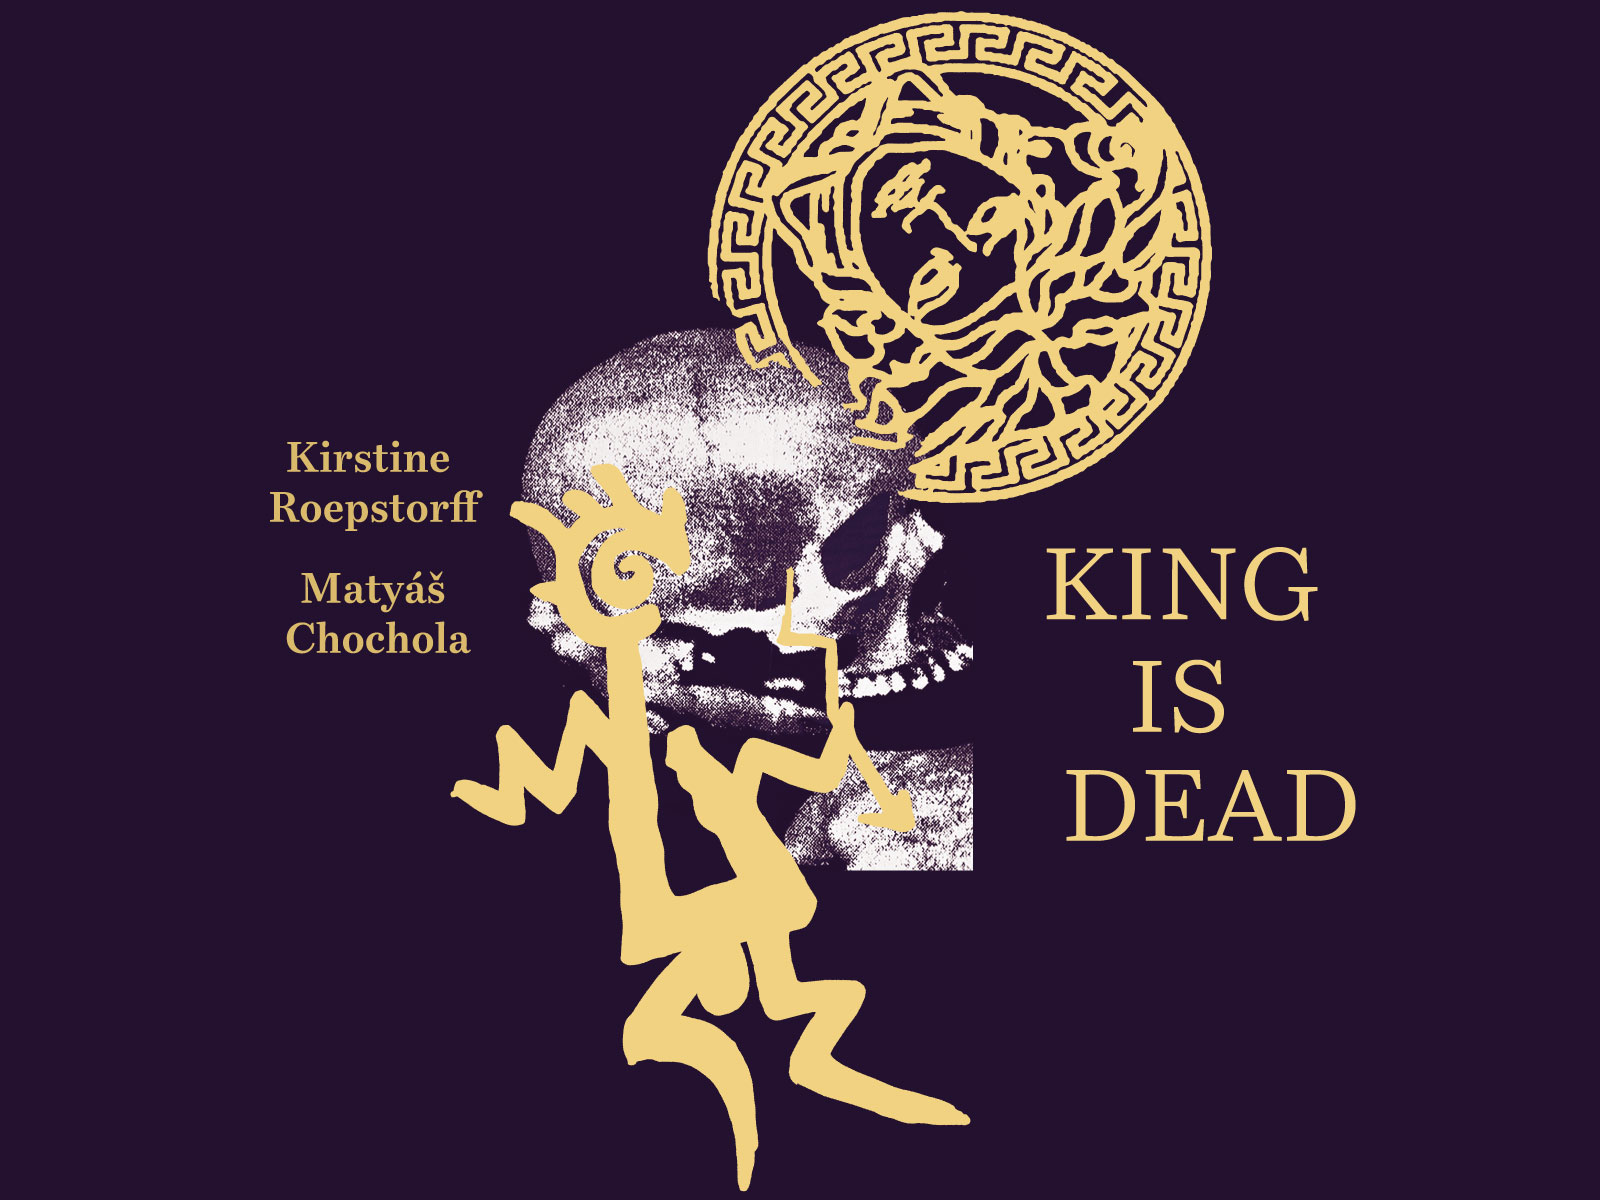 Kirstine Roepstorff / Matyas Chochola: King Is Dead from 7. 6. 2019